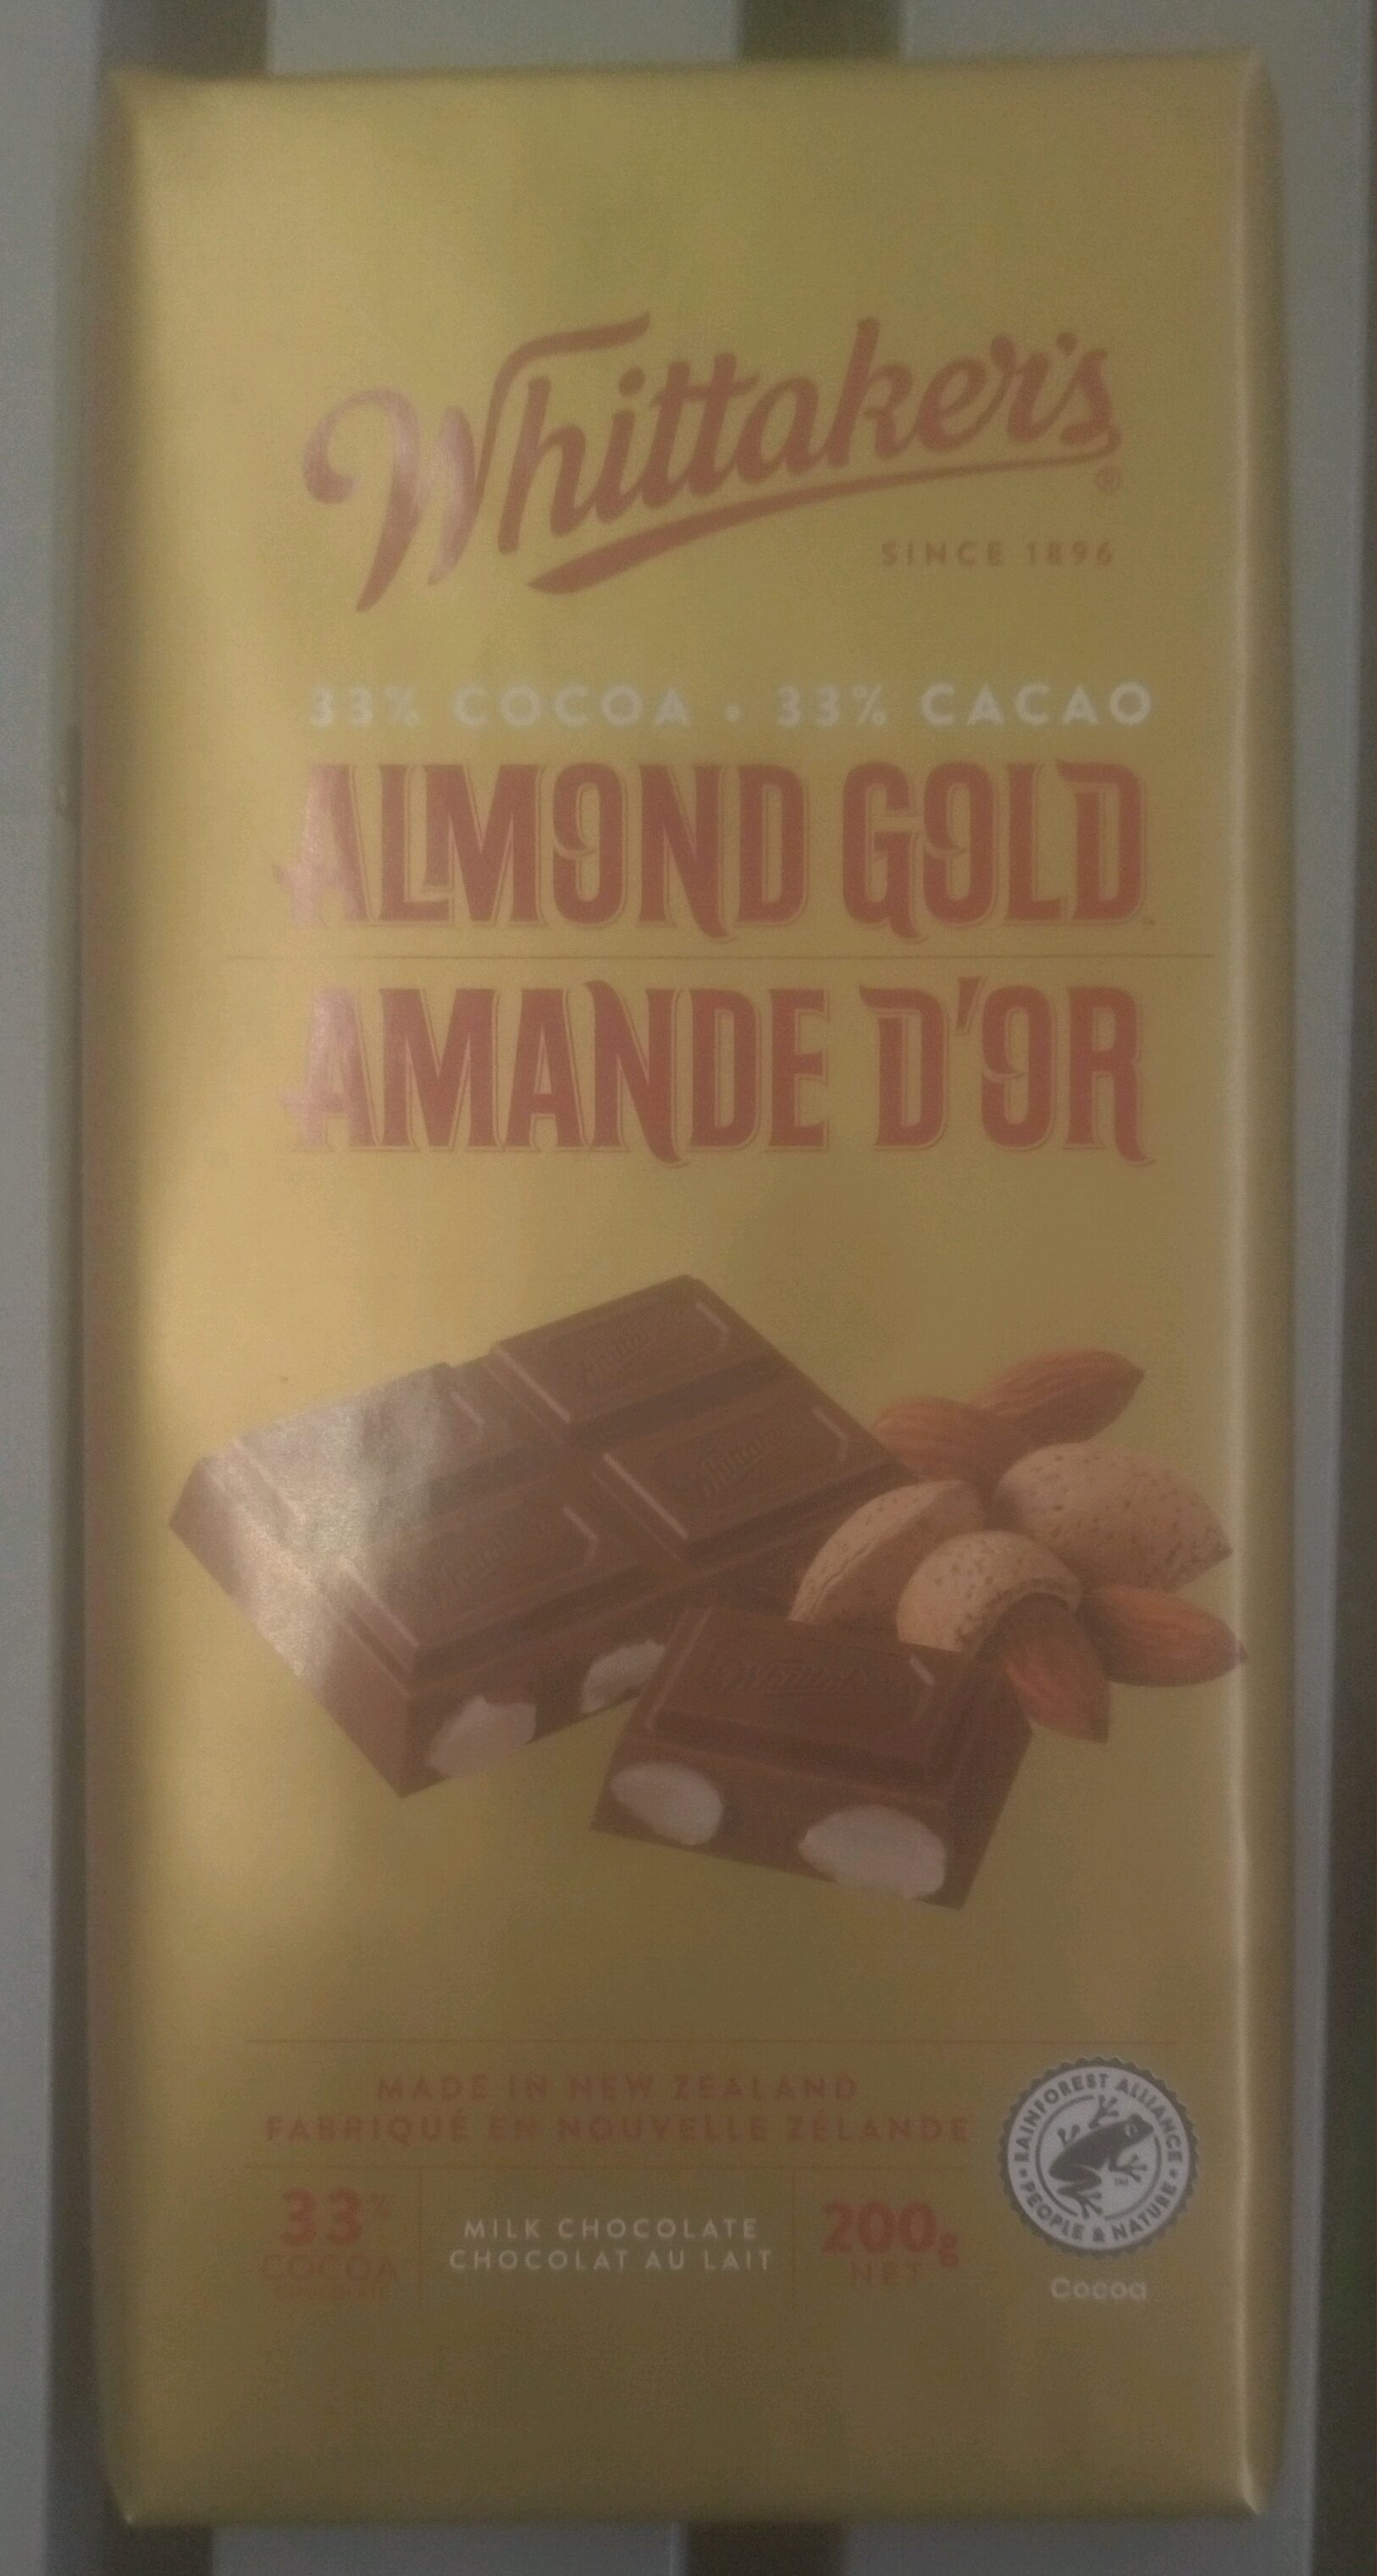 33% Cocoa Almond Gold Milk Chocolate Bar - Produit